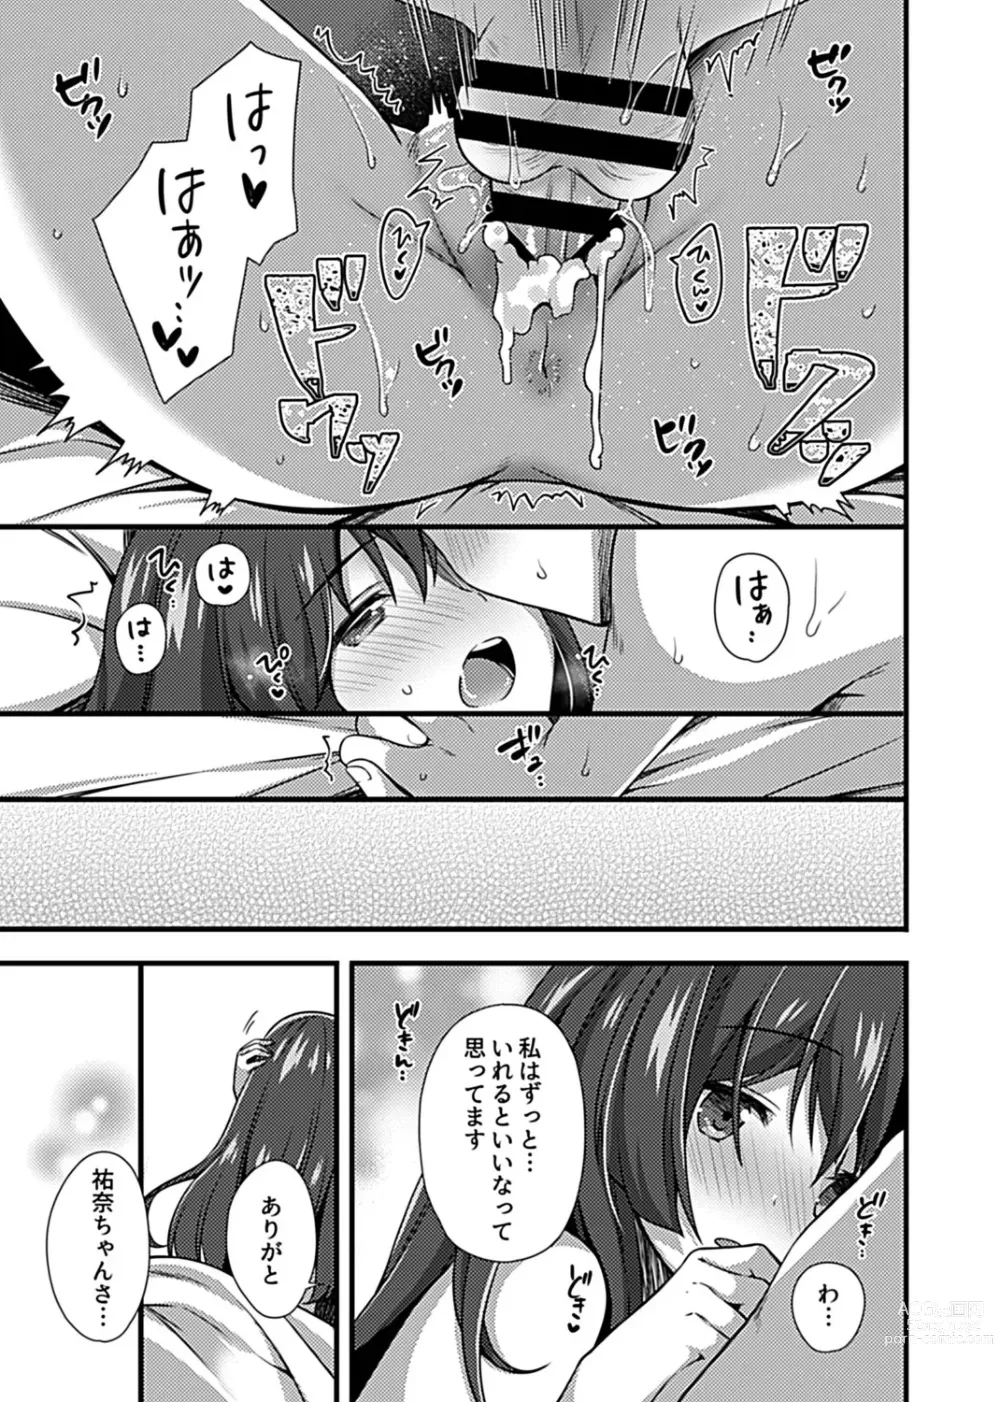 Page 165 of manga COMIC GEE Vol. 17